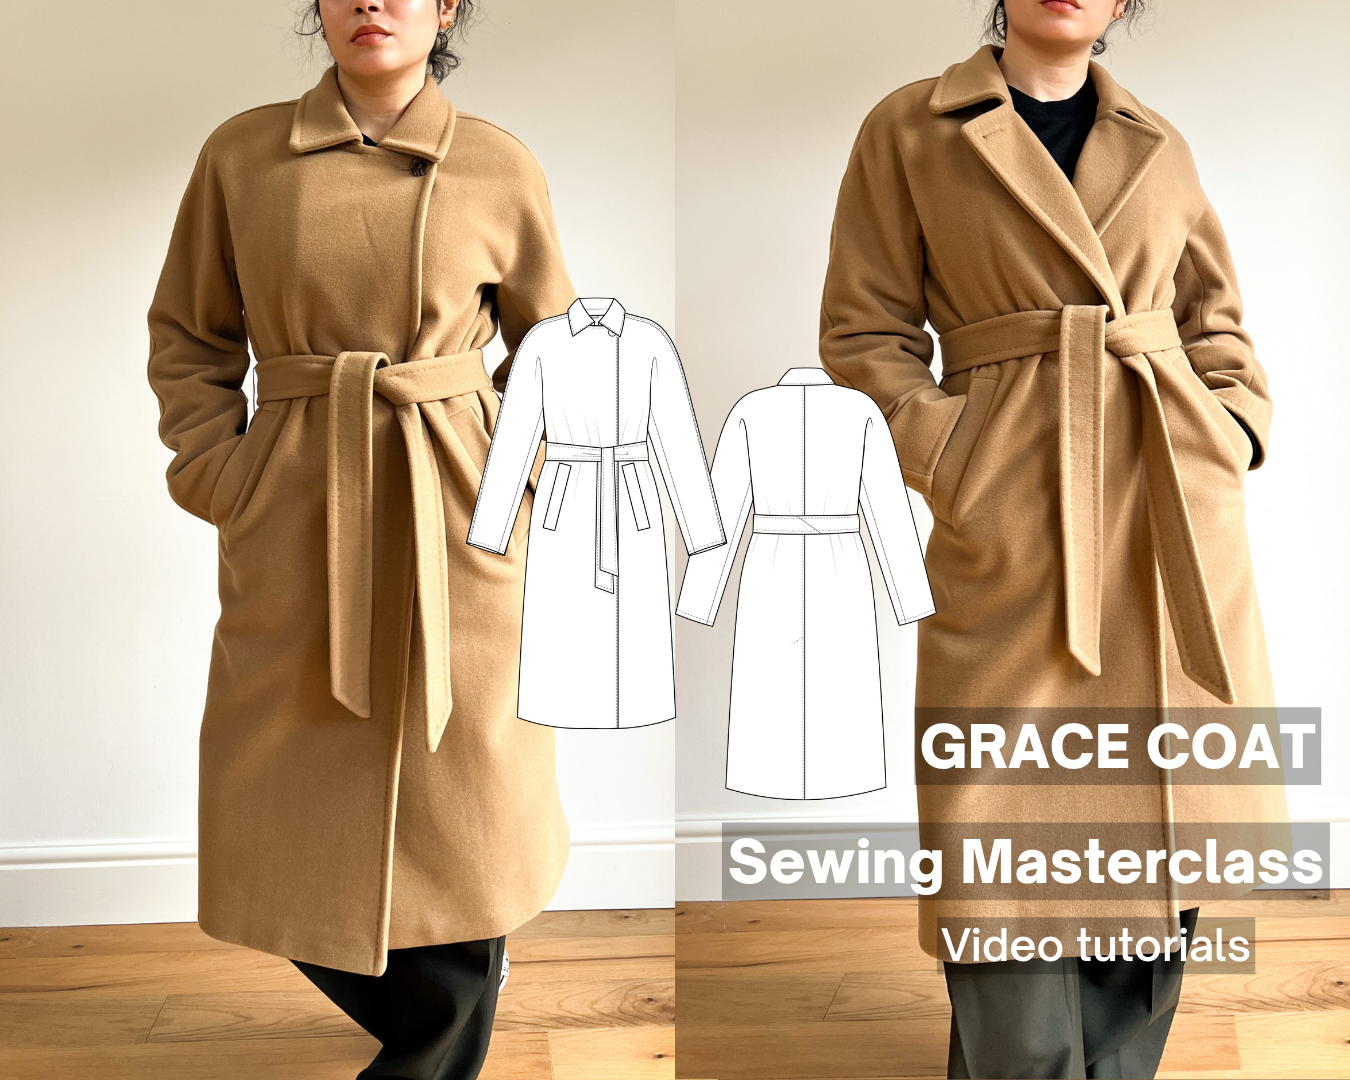 GRACE COAT – PDF SEWING PATTERN - Bella loves patterns